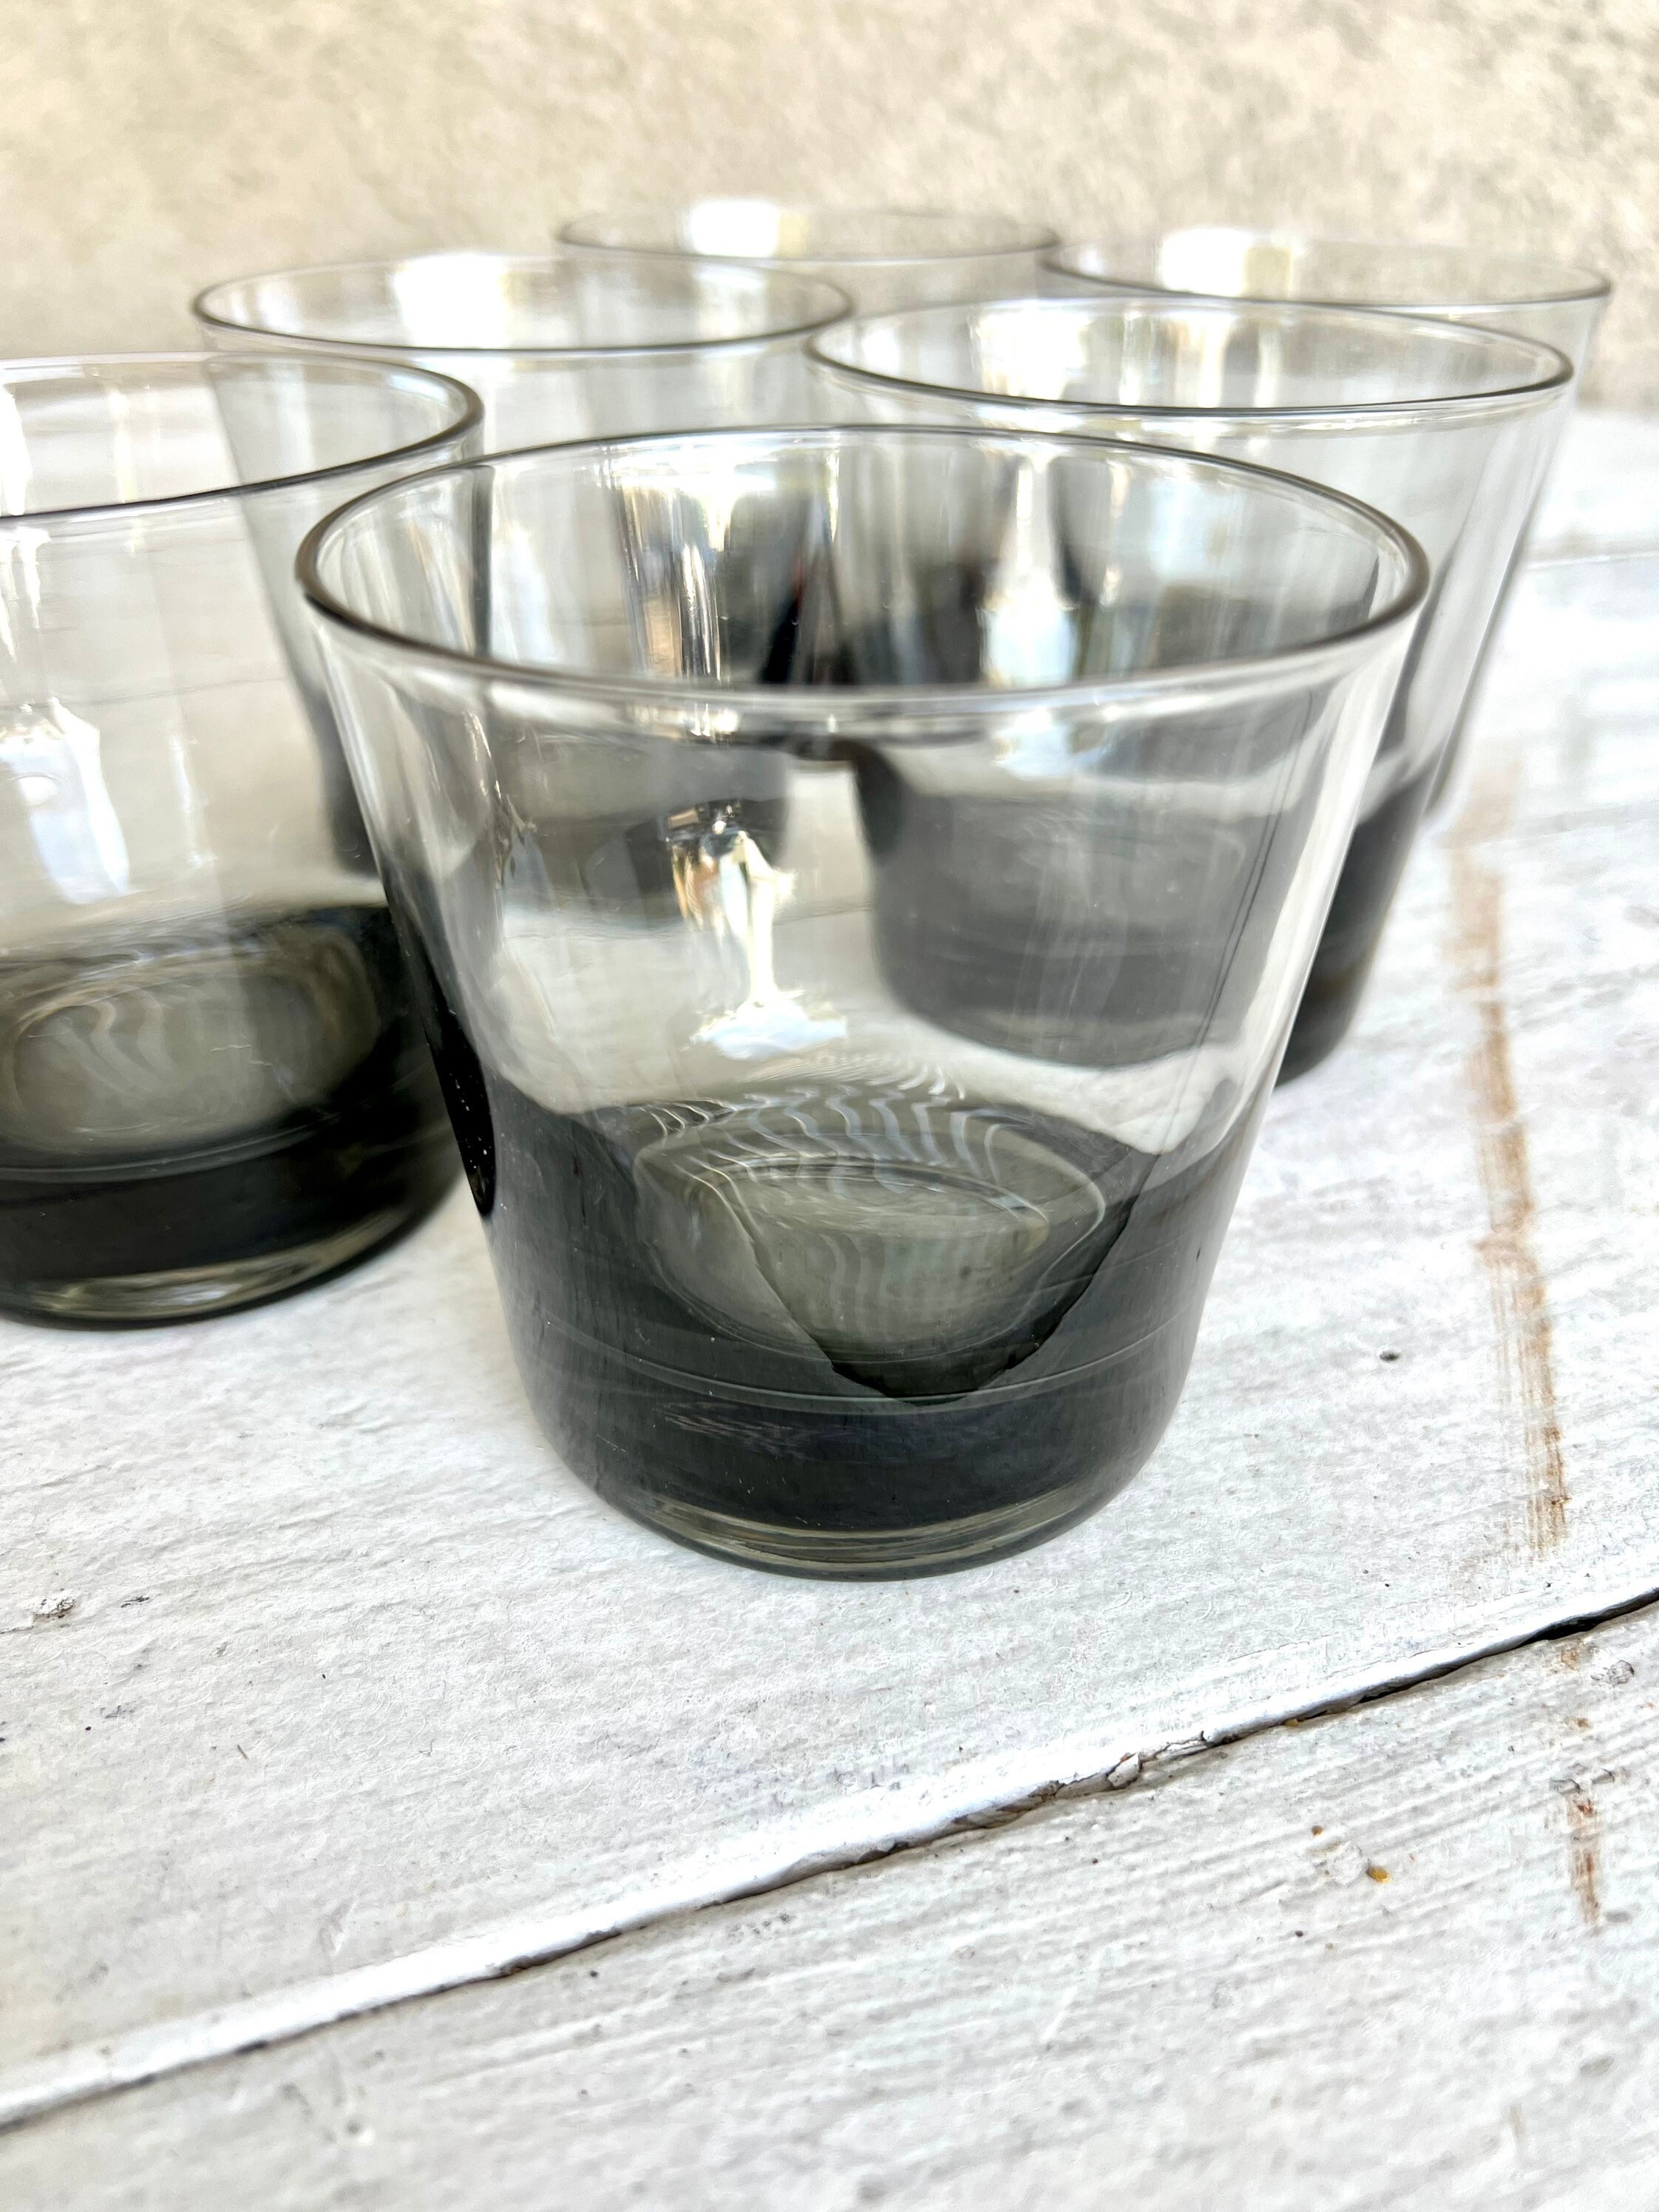 Smoky Gray Glass Tumblers 16 Oz, Vintage Thick Base Drinking Kitchen  Glasses Set of 4 Water Glasses, Vintage Grey Kitchen Glassware 